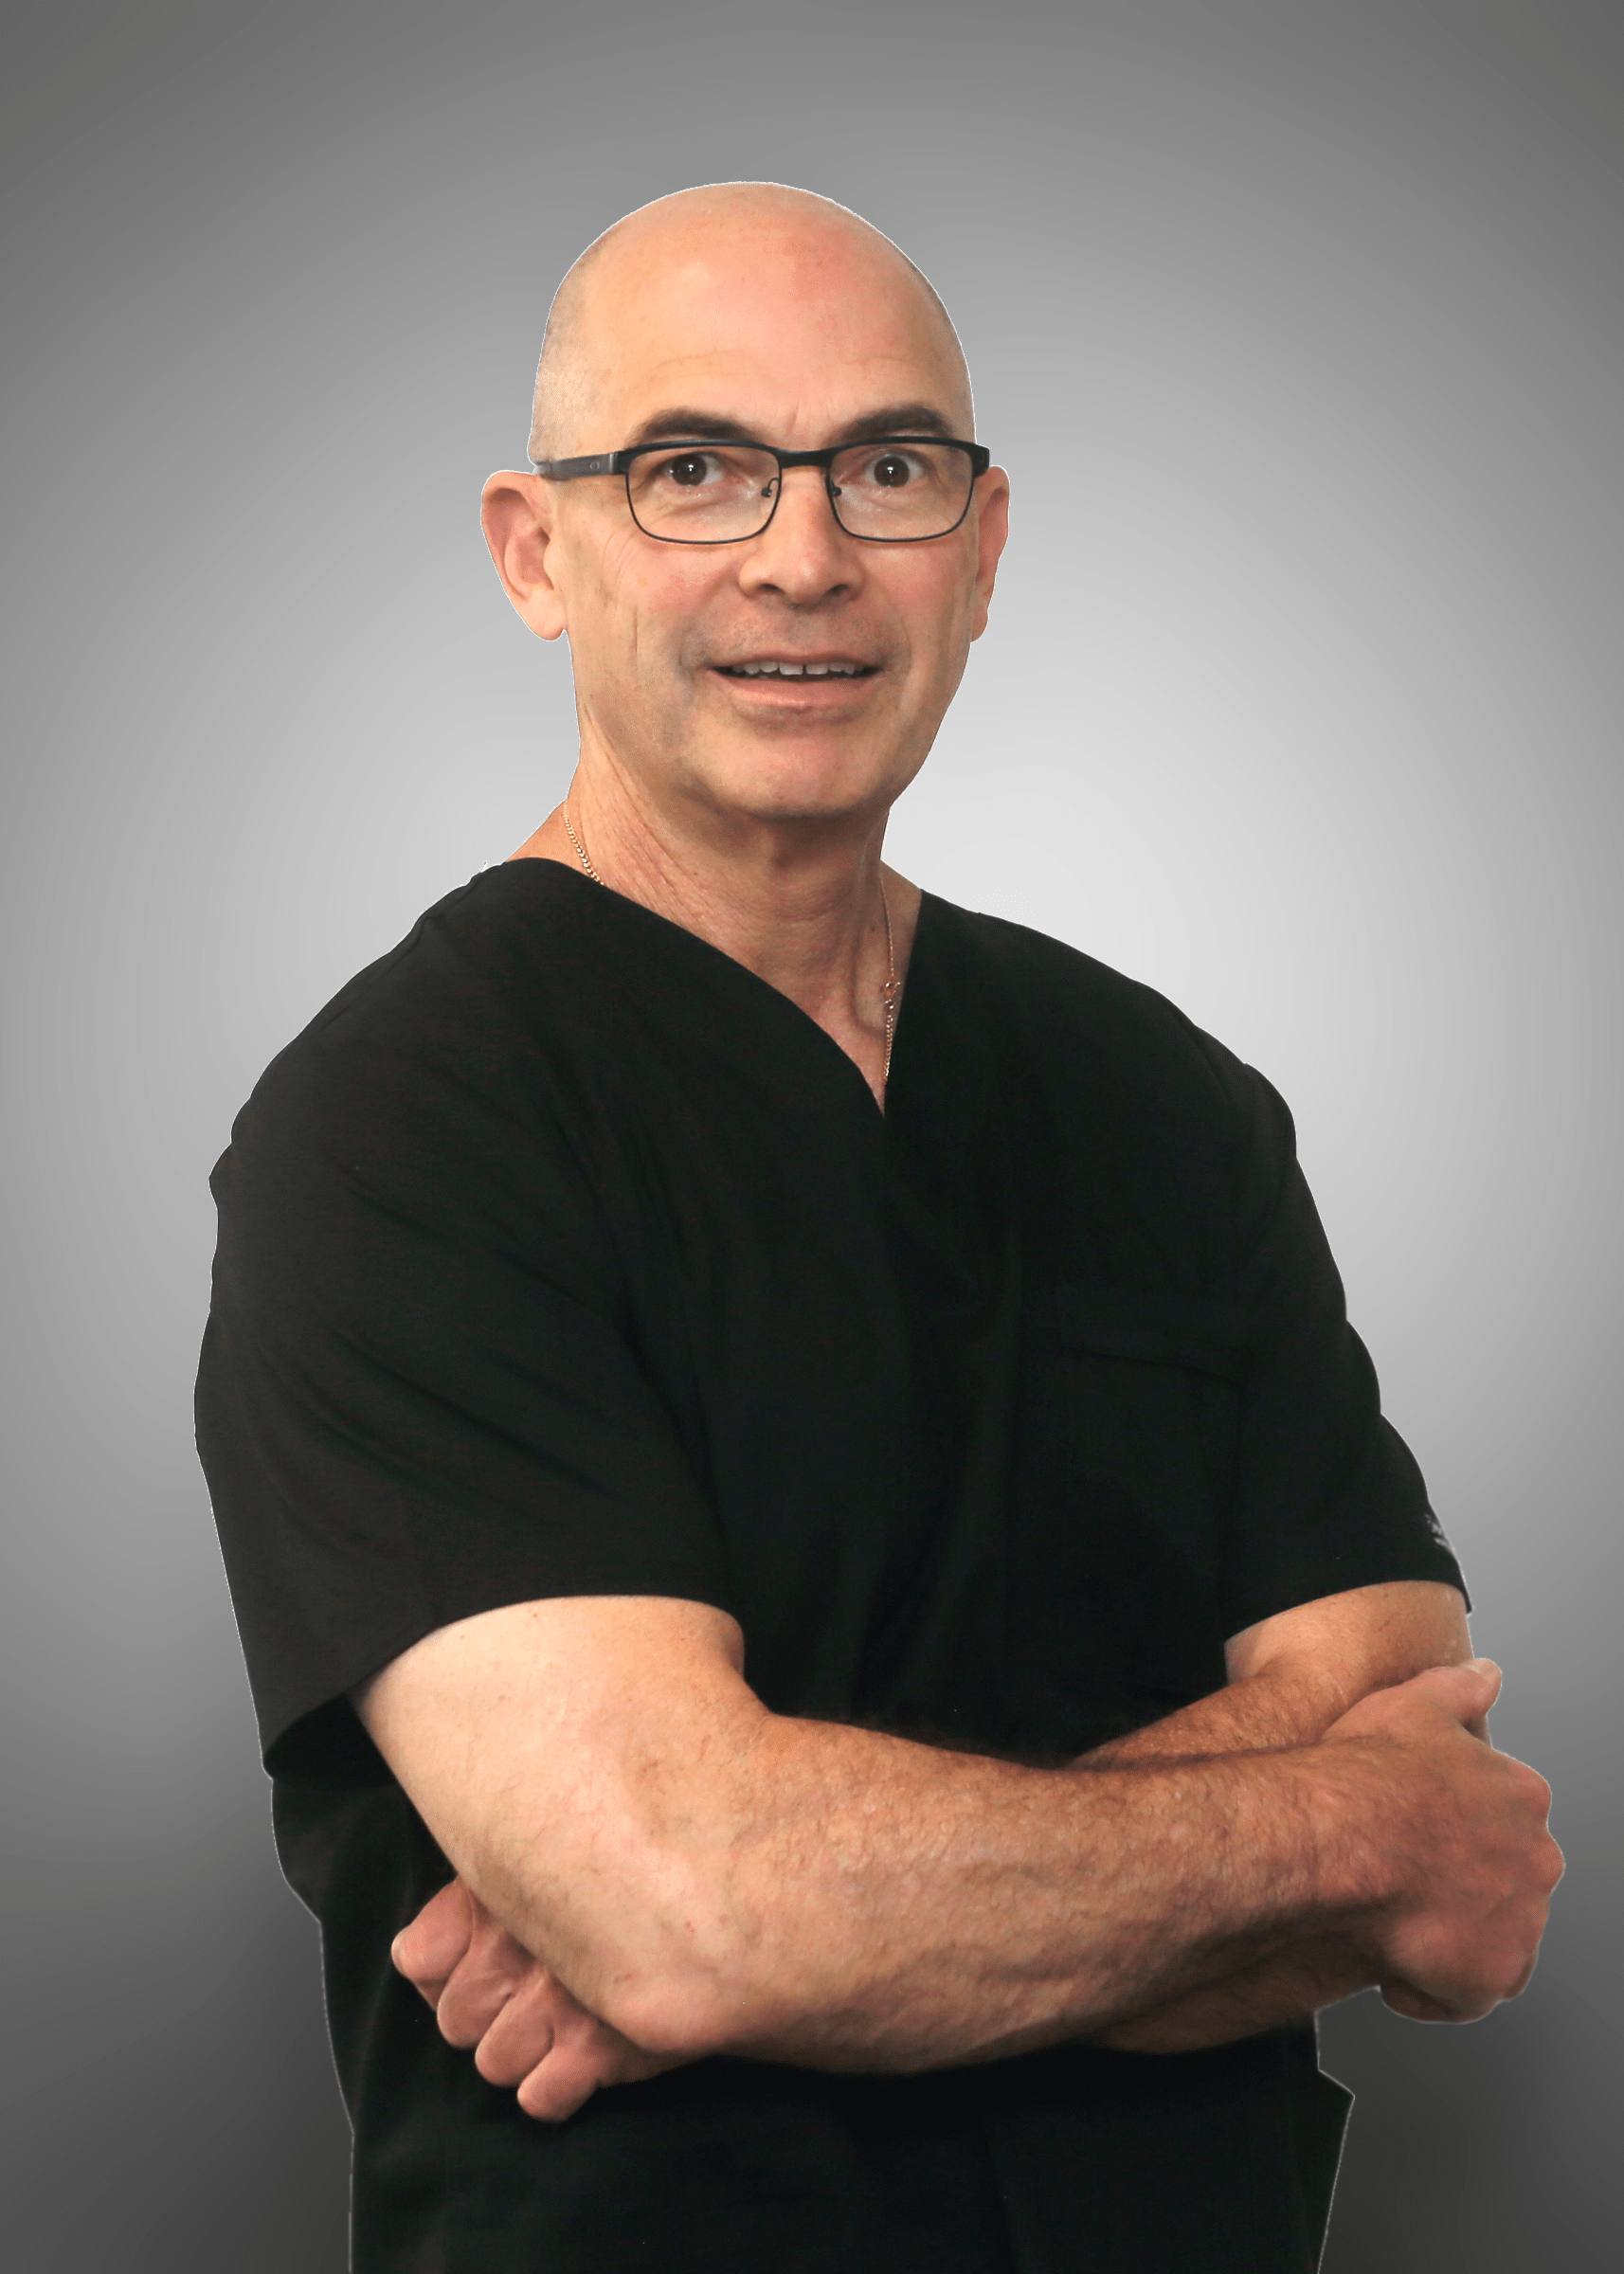 Dr. Aronica headshot image